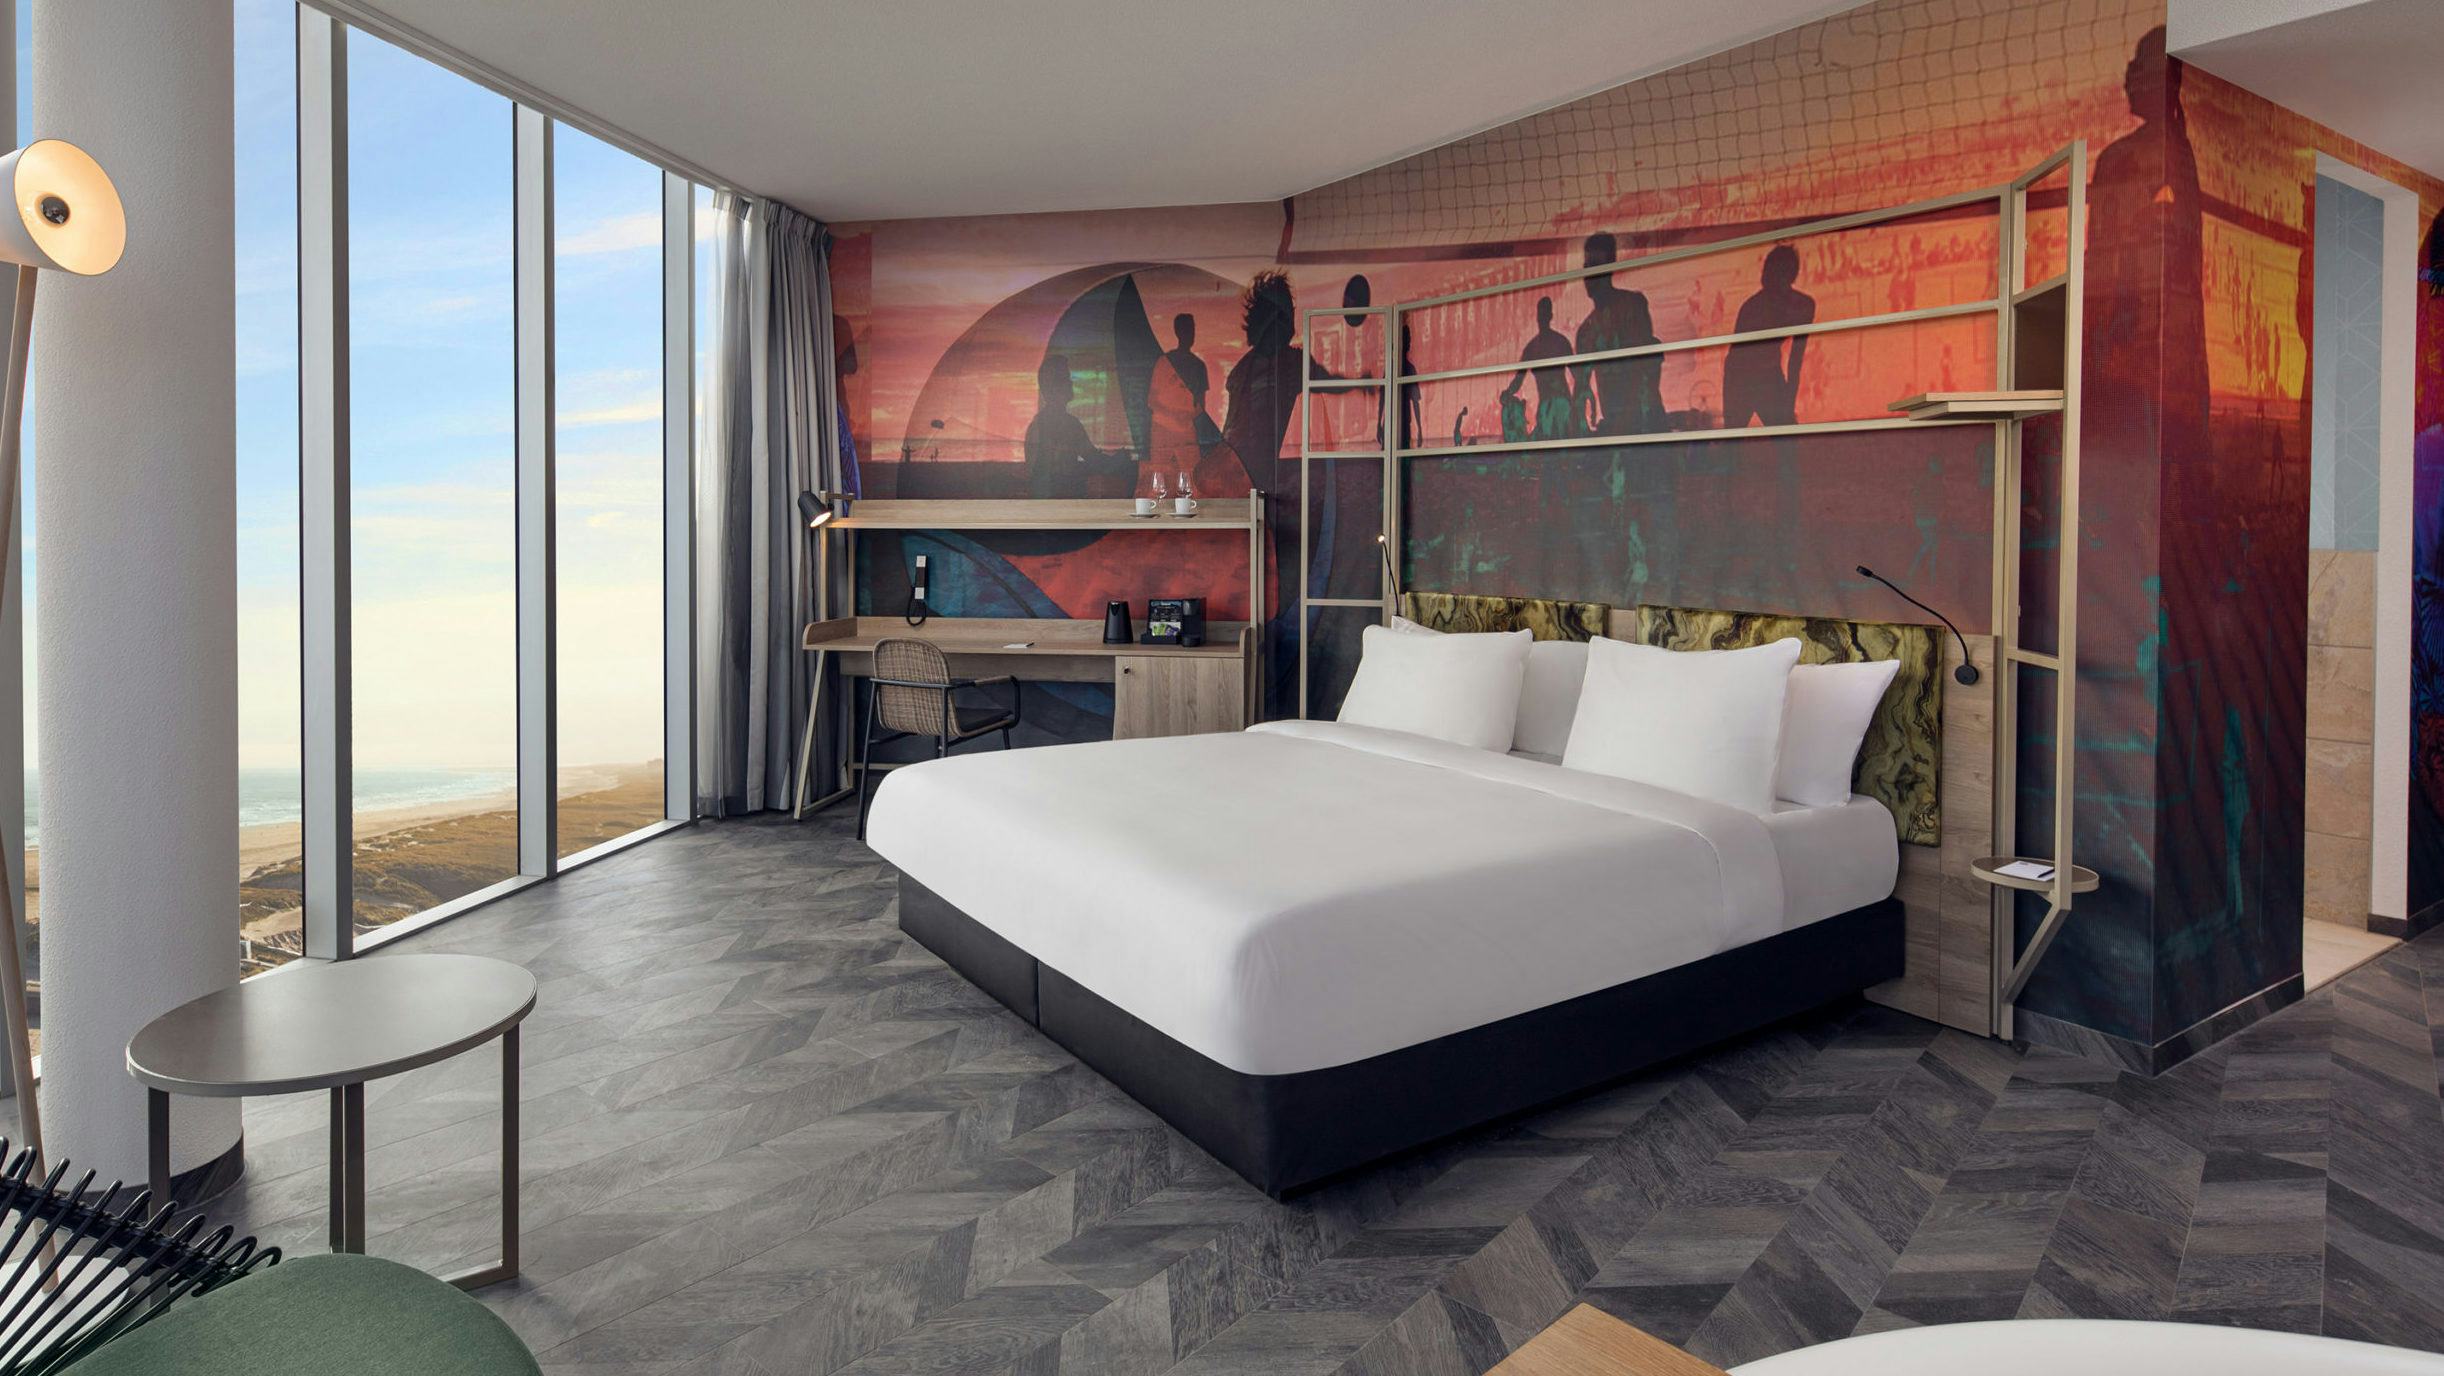 Inntel Hotels Den Haag Marina Beach geopend